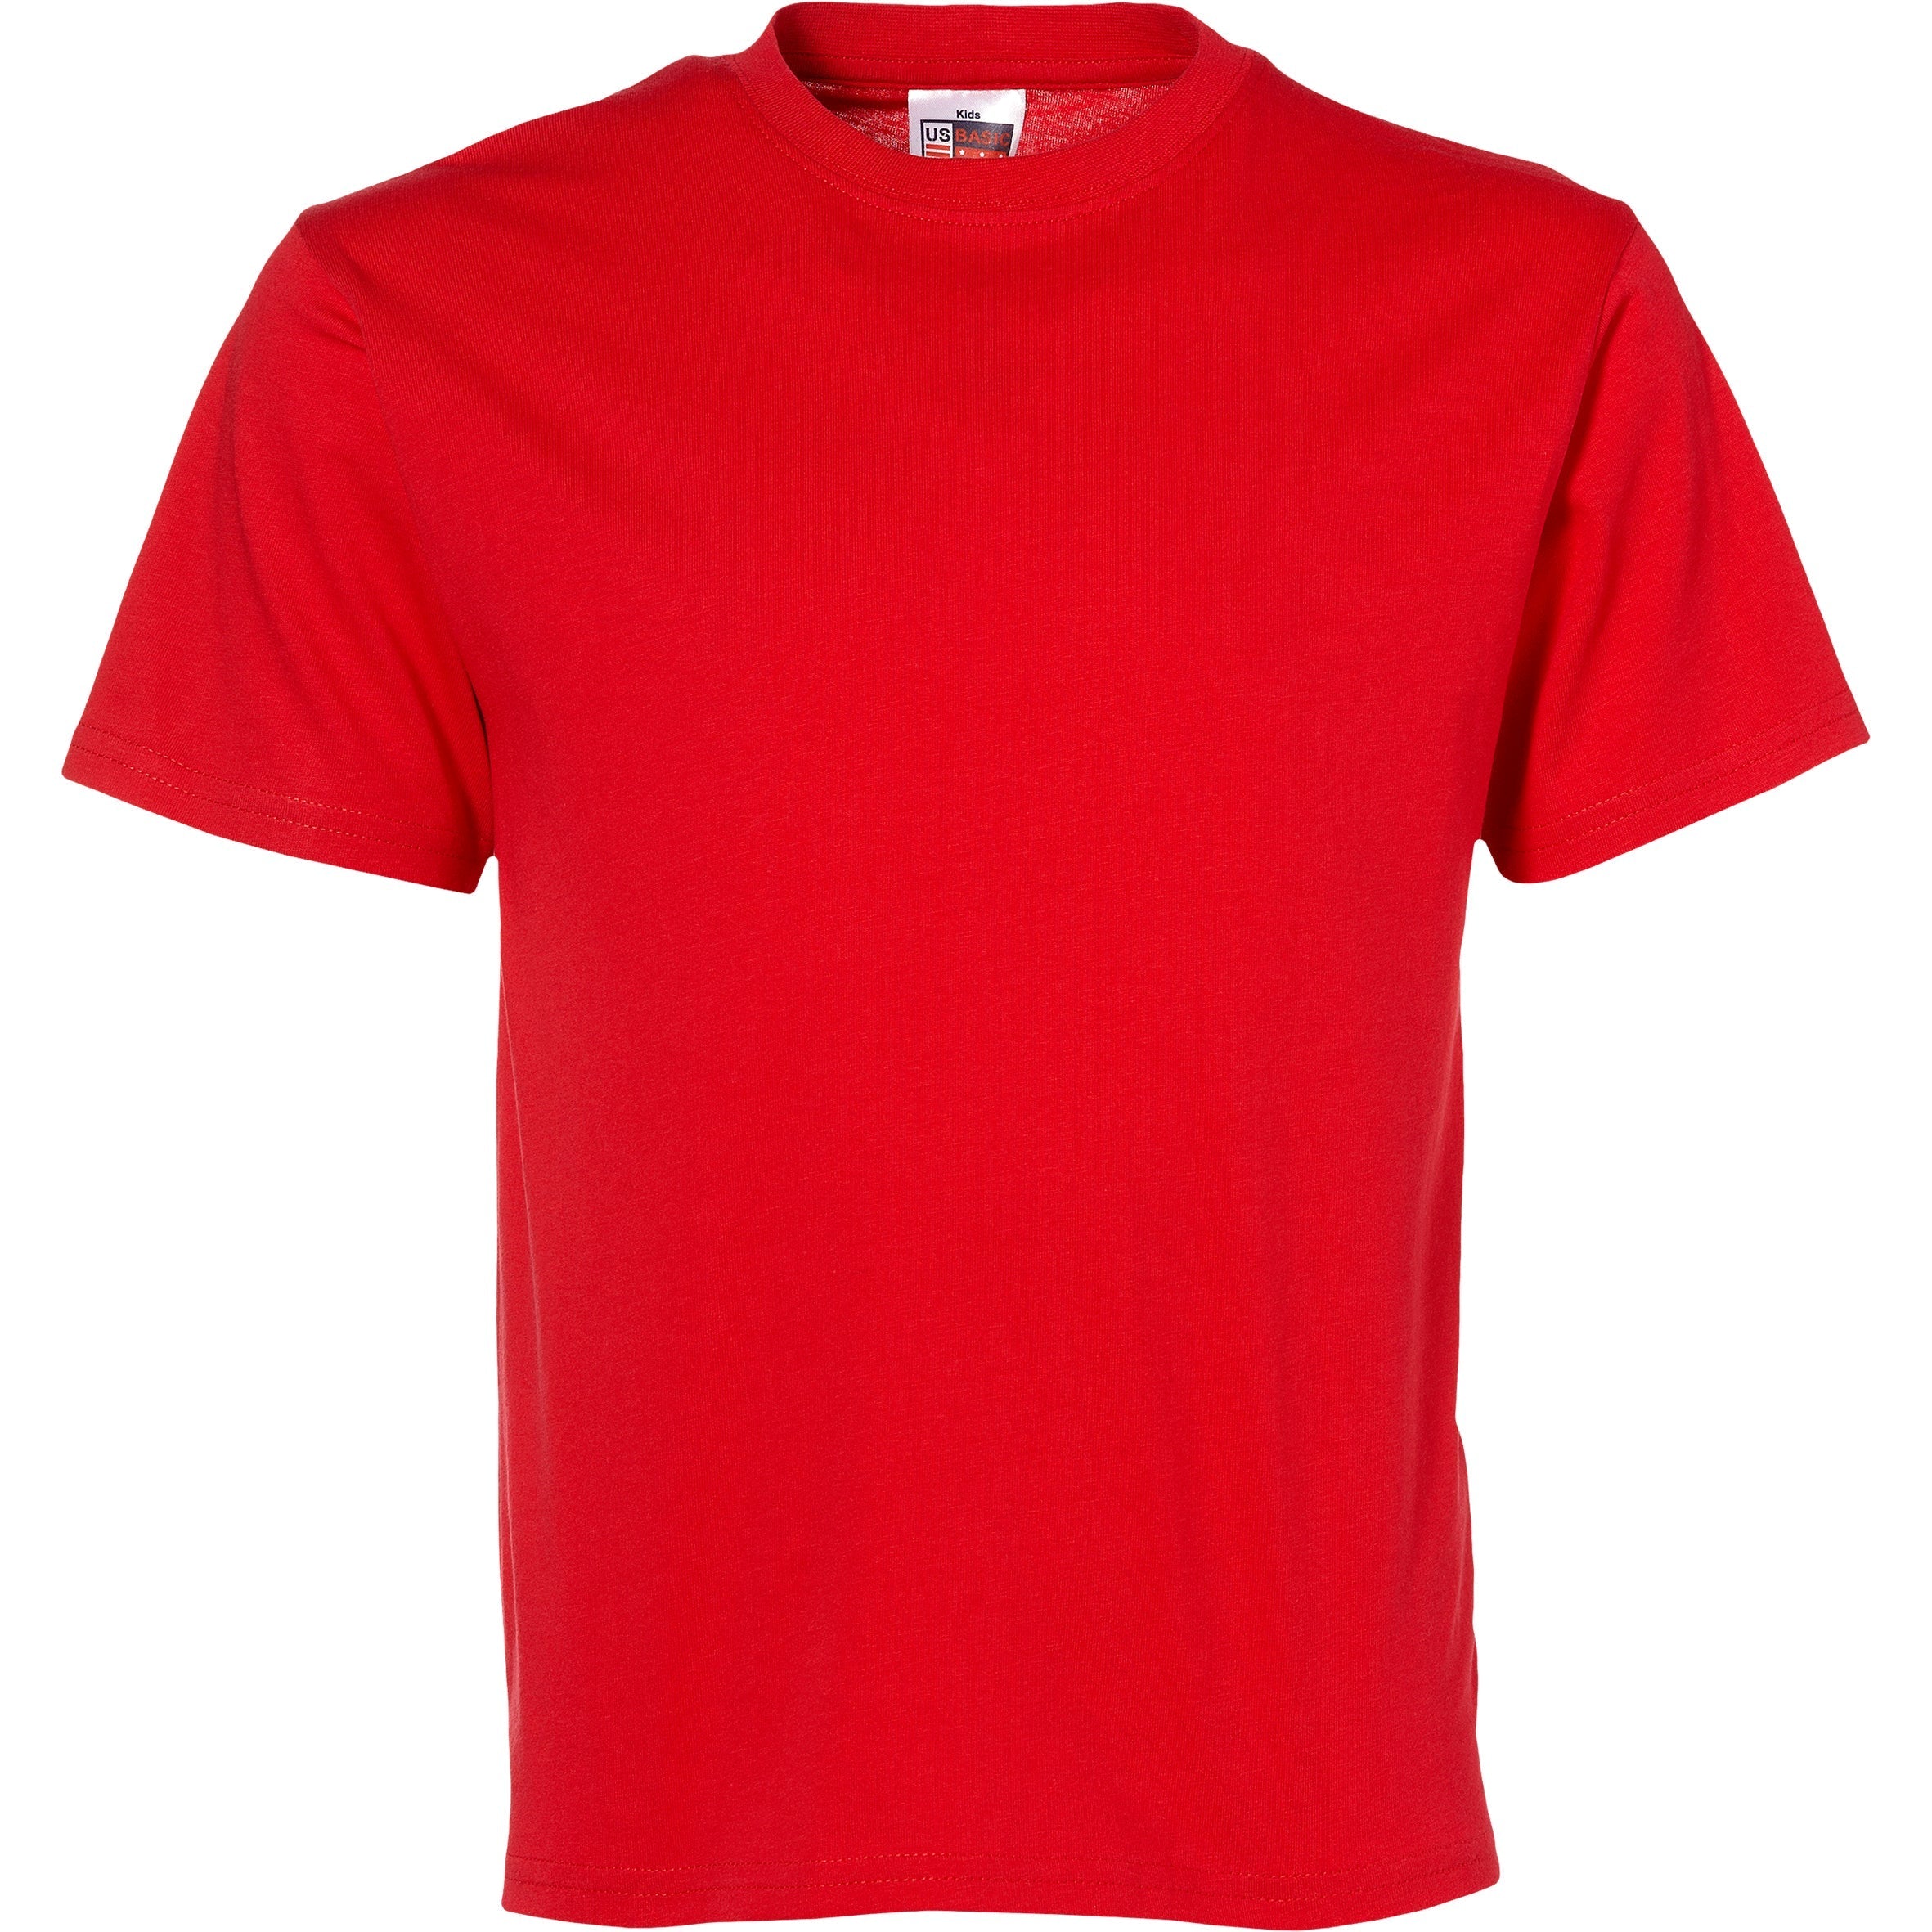 Kids Super Club 150 T-Shirt-104-Red-R